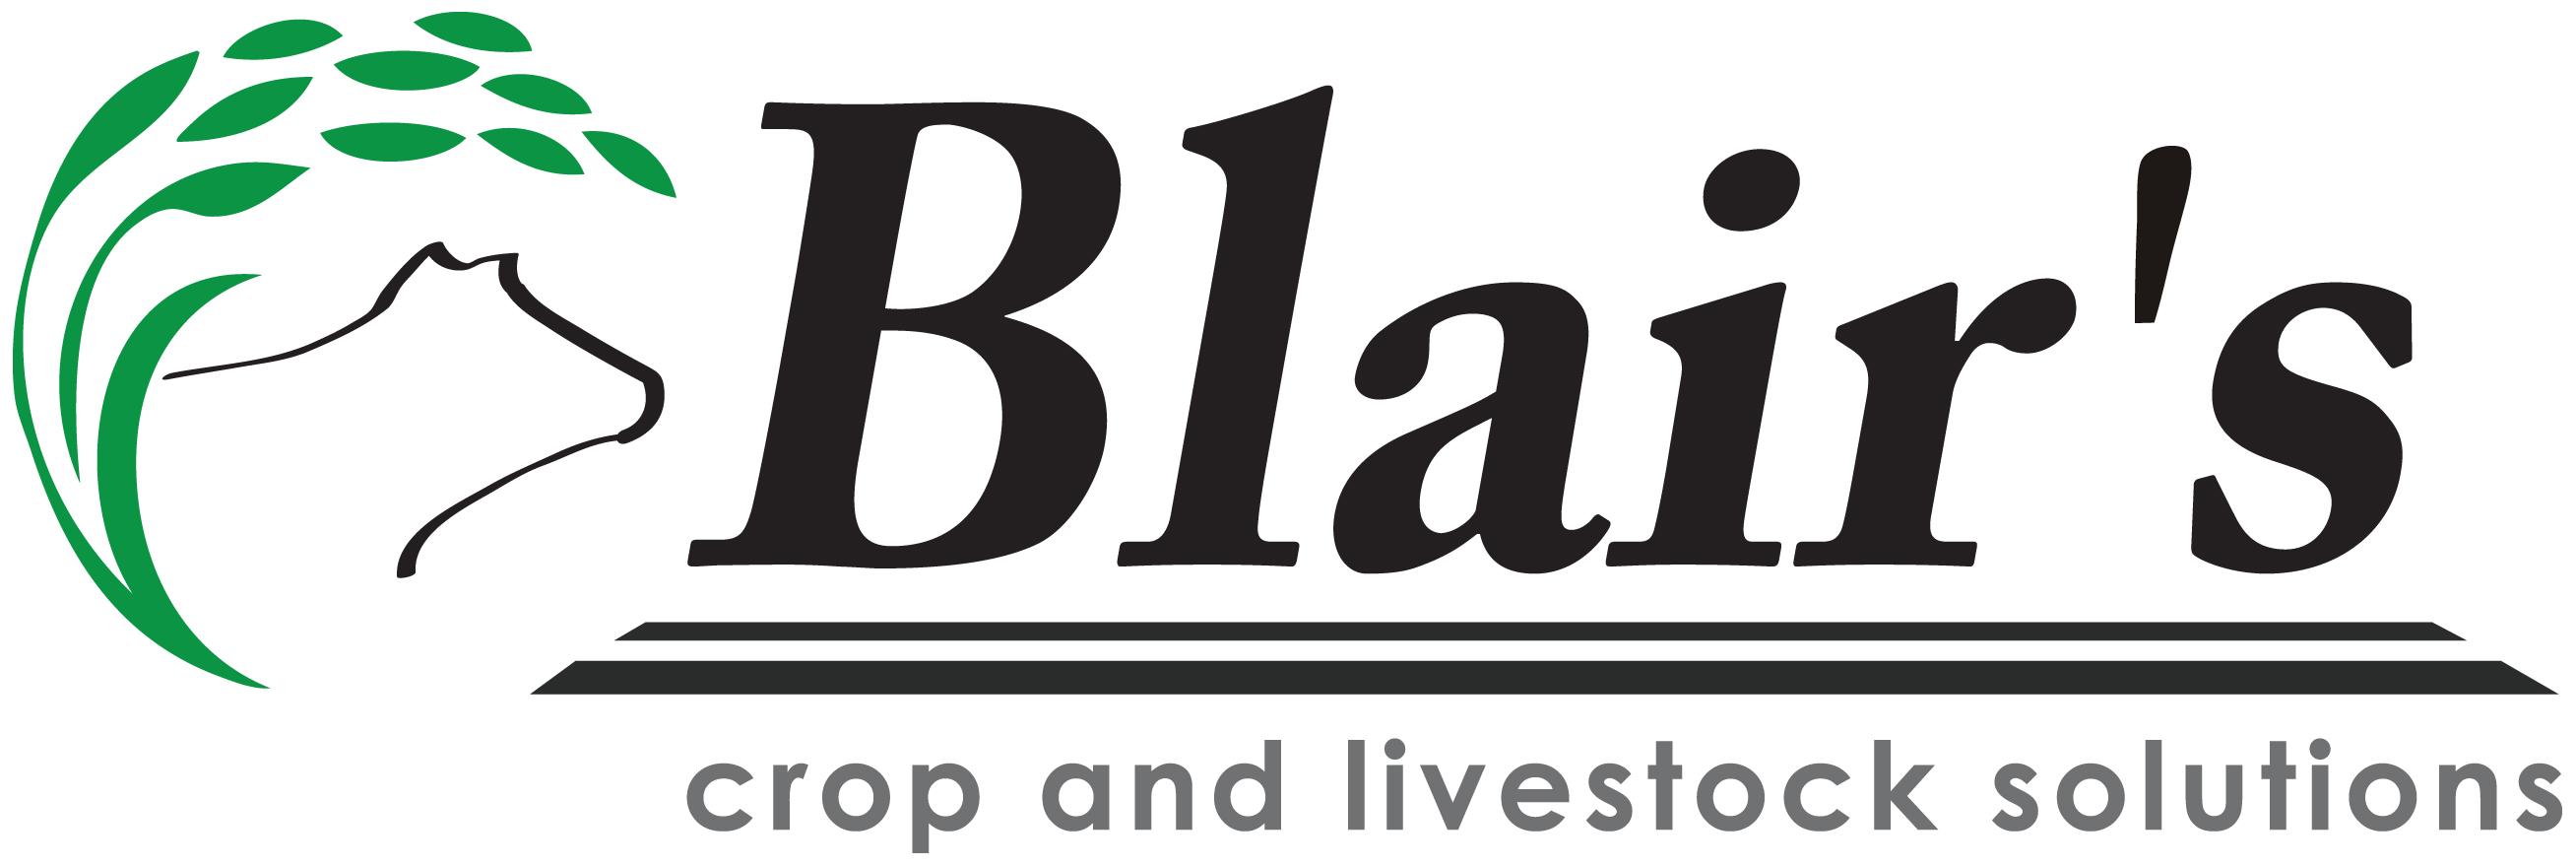 Livestock Logo - Blairs crop and livestock new logo